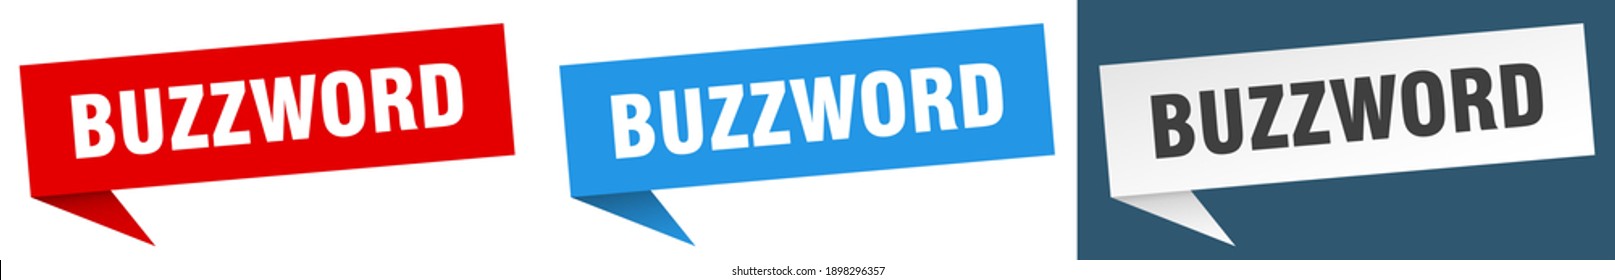 buzzword banner sign. buzzword speech bubble label set